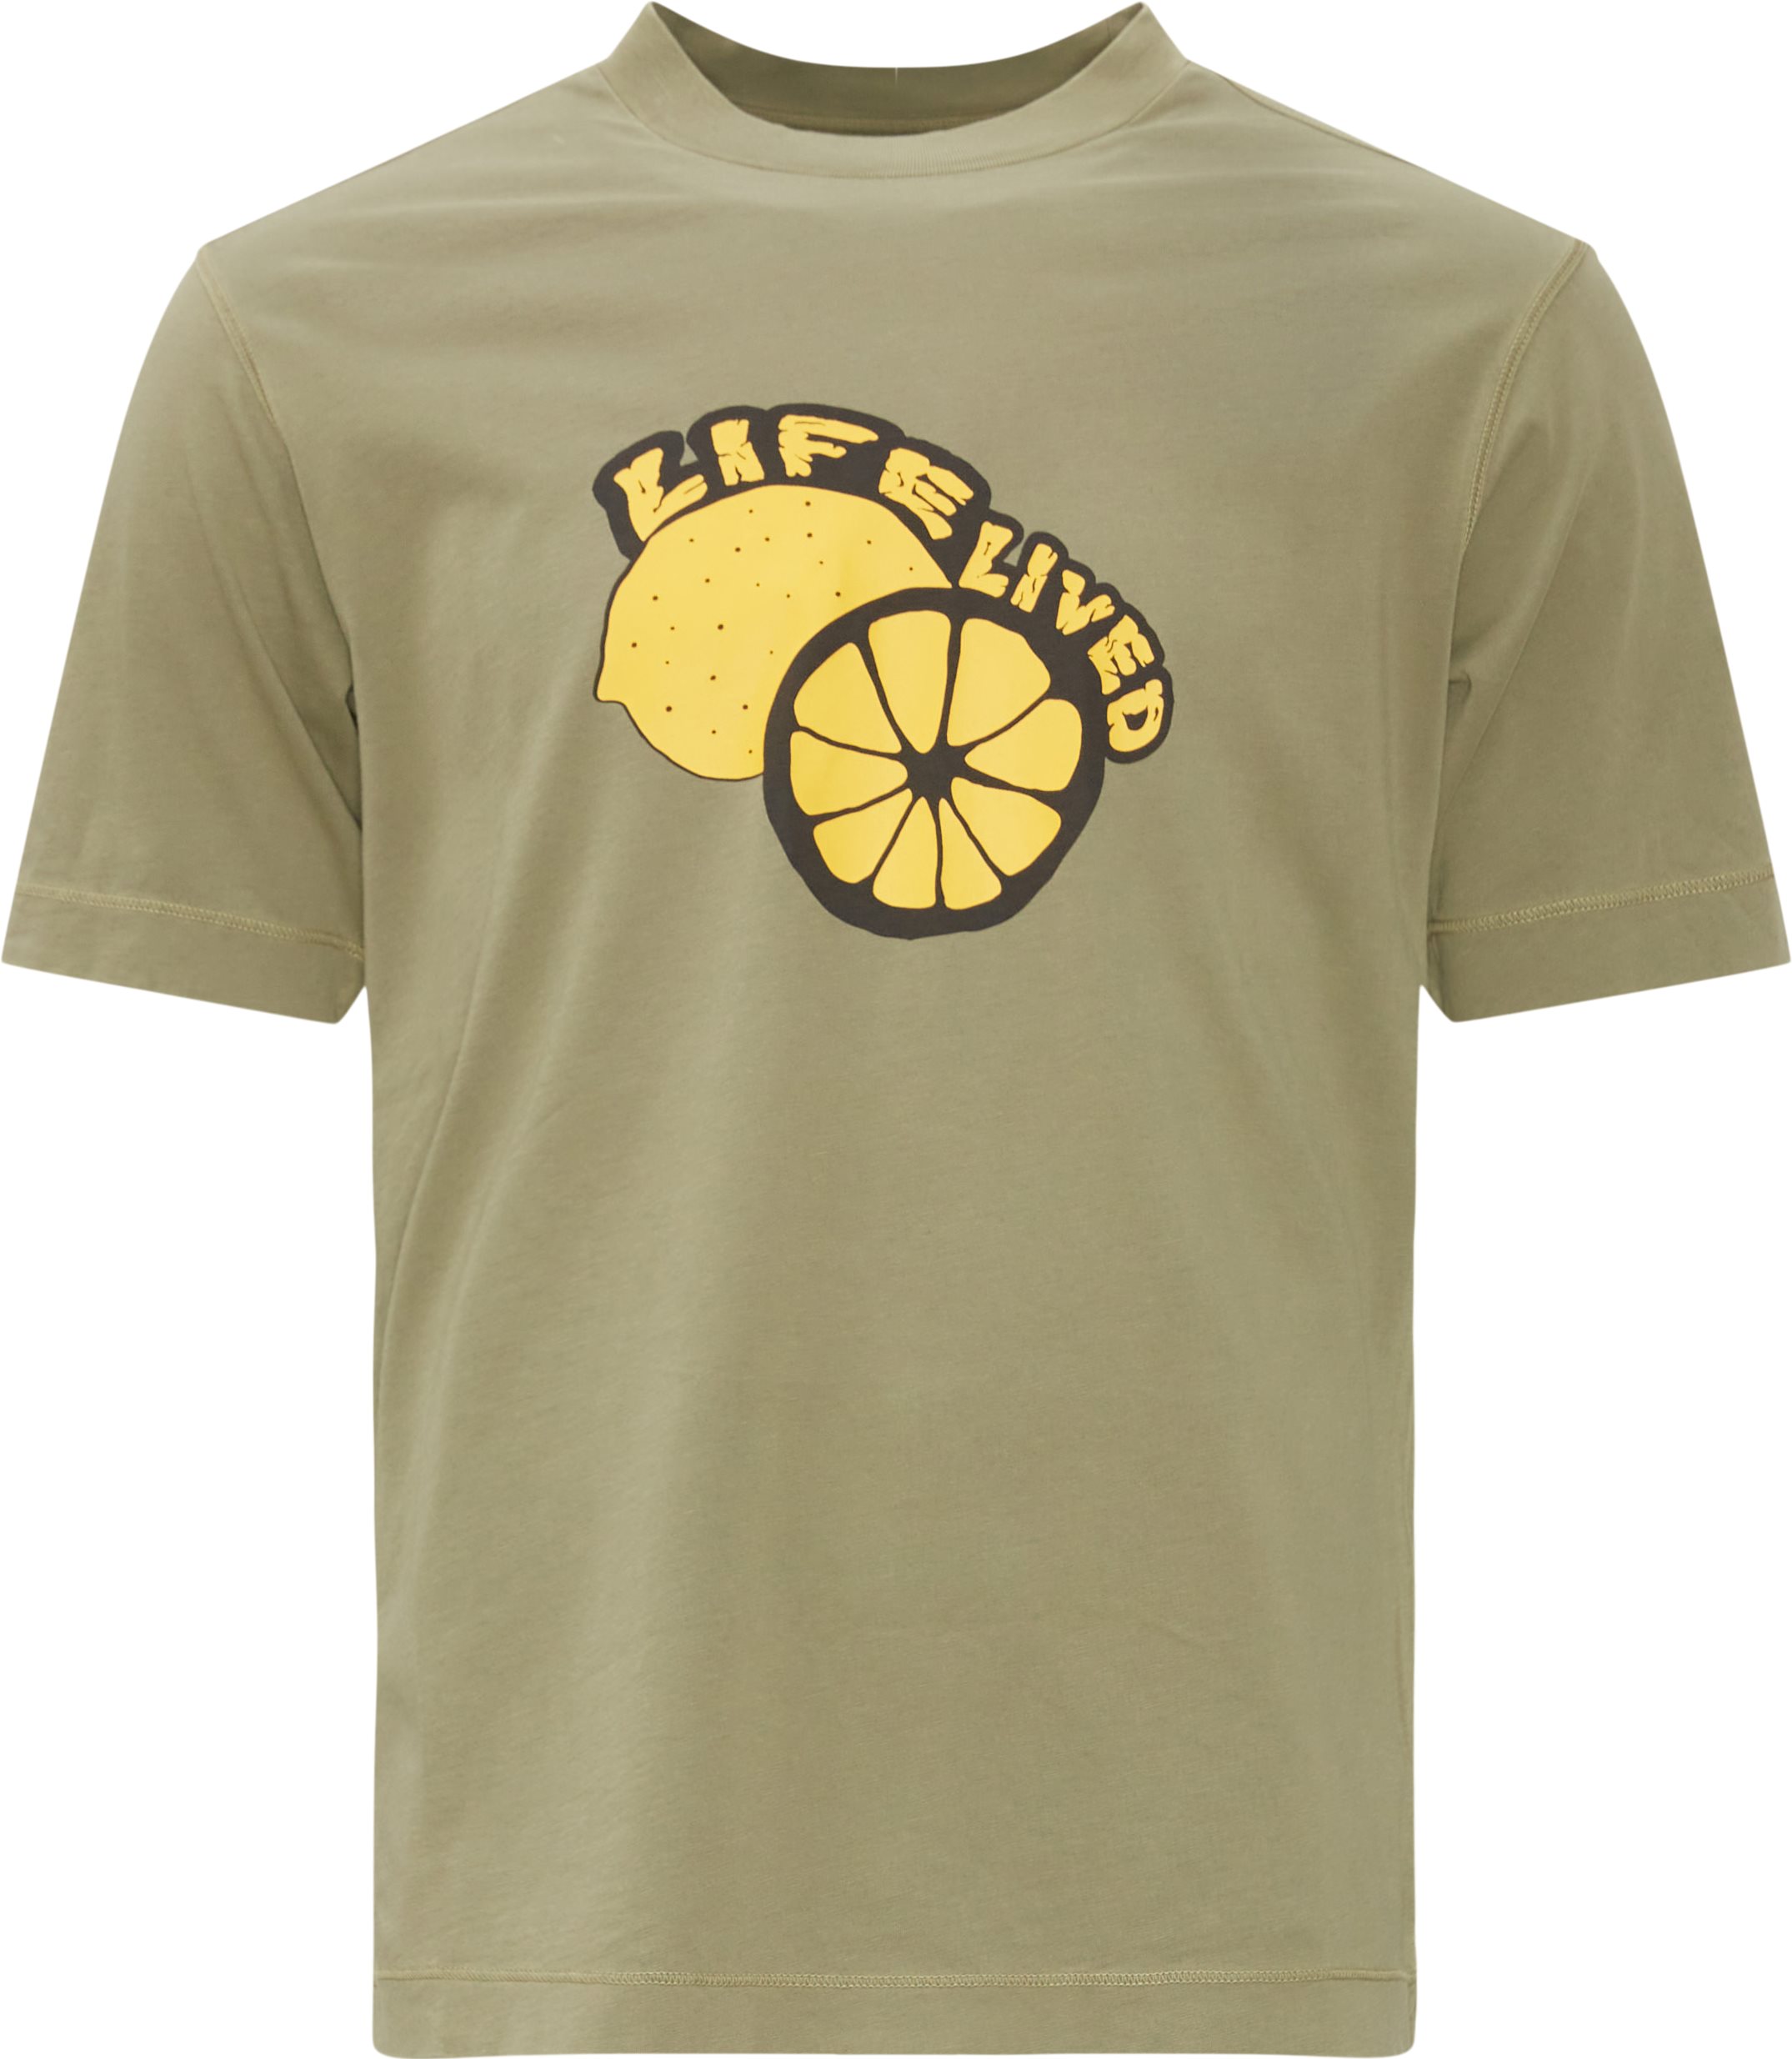 Print Tee - T-shirts - Regular fit - Army